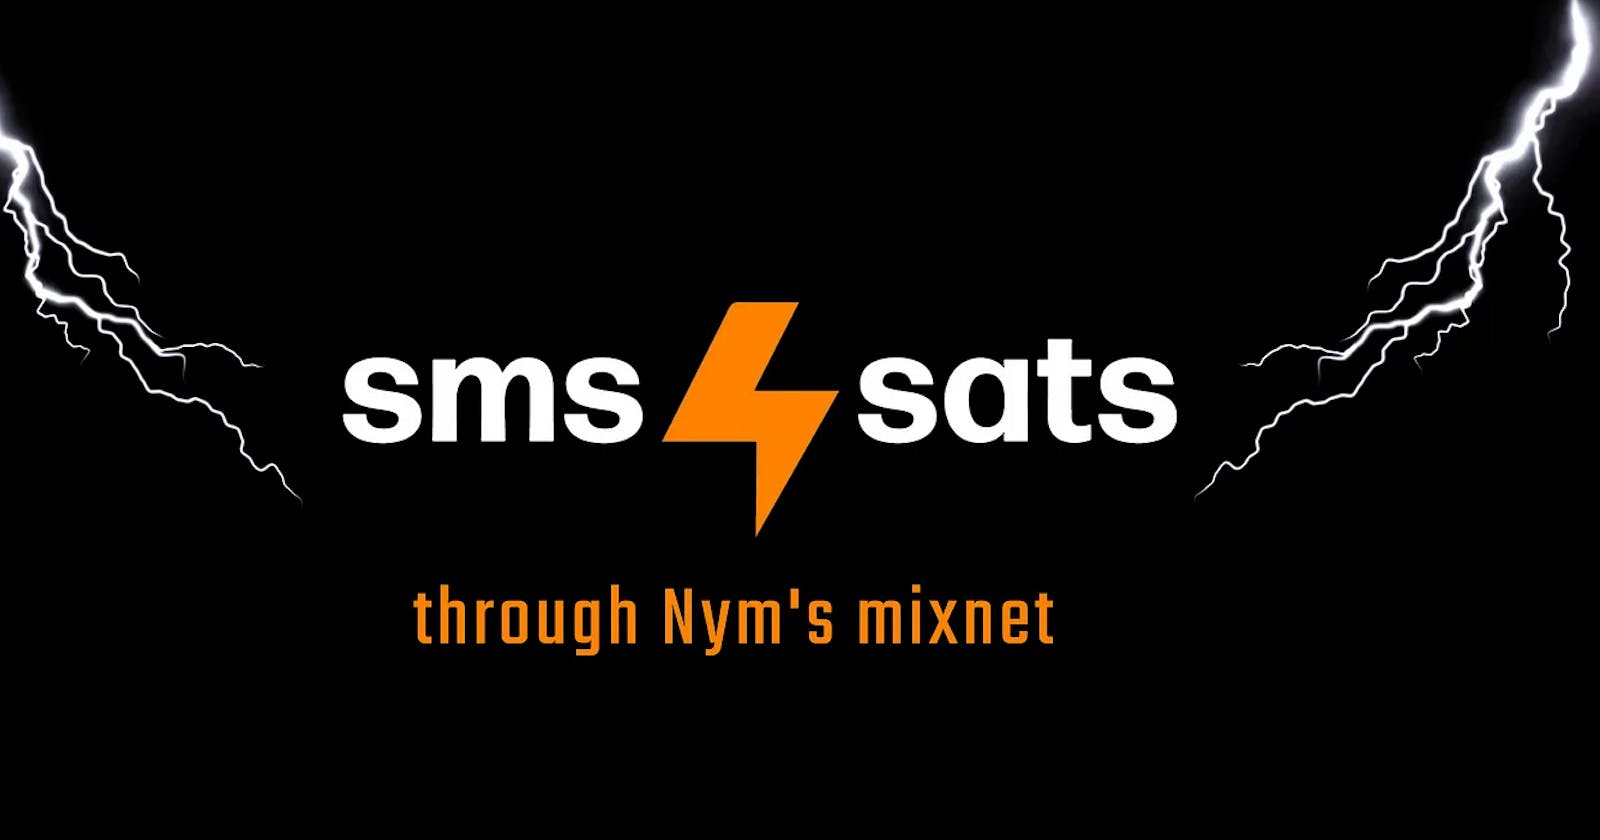 Access to sms4sats.com through Nym’s mixnet